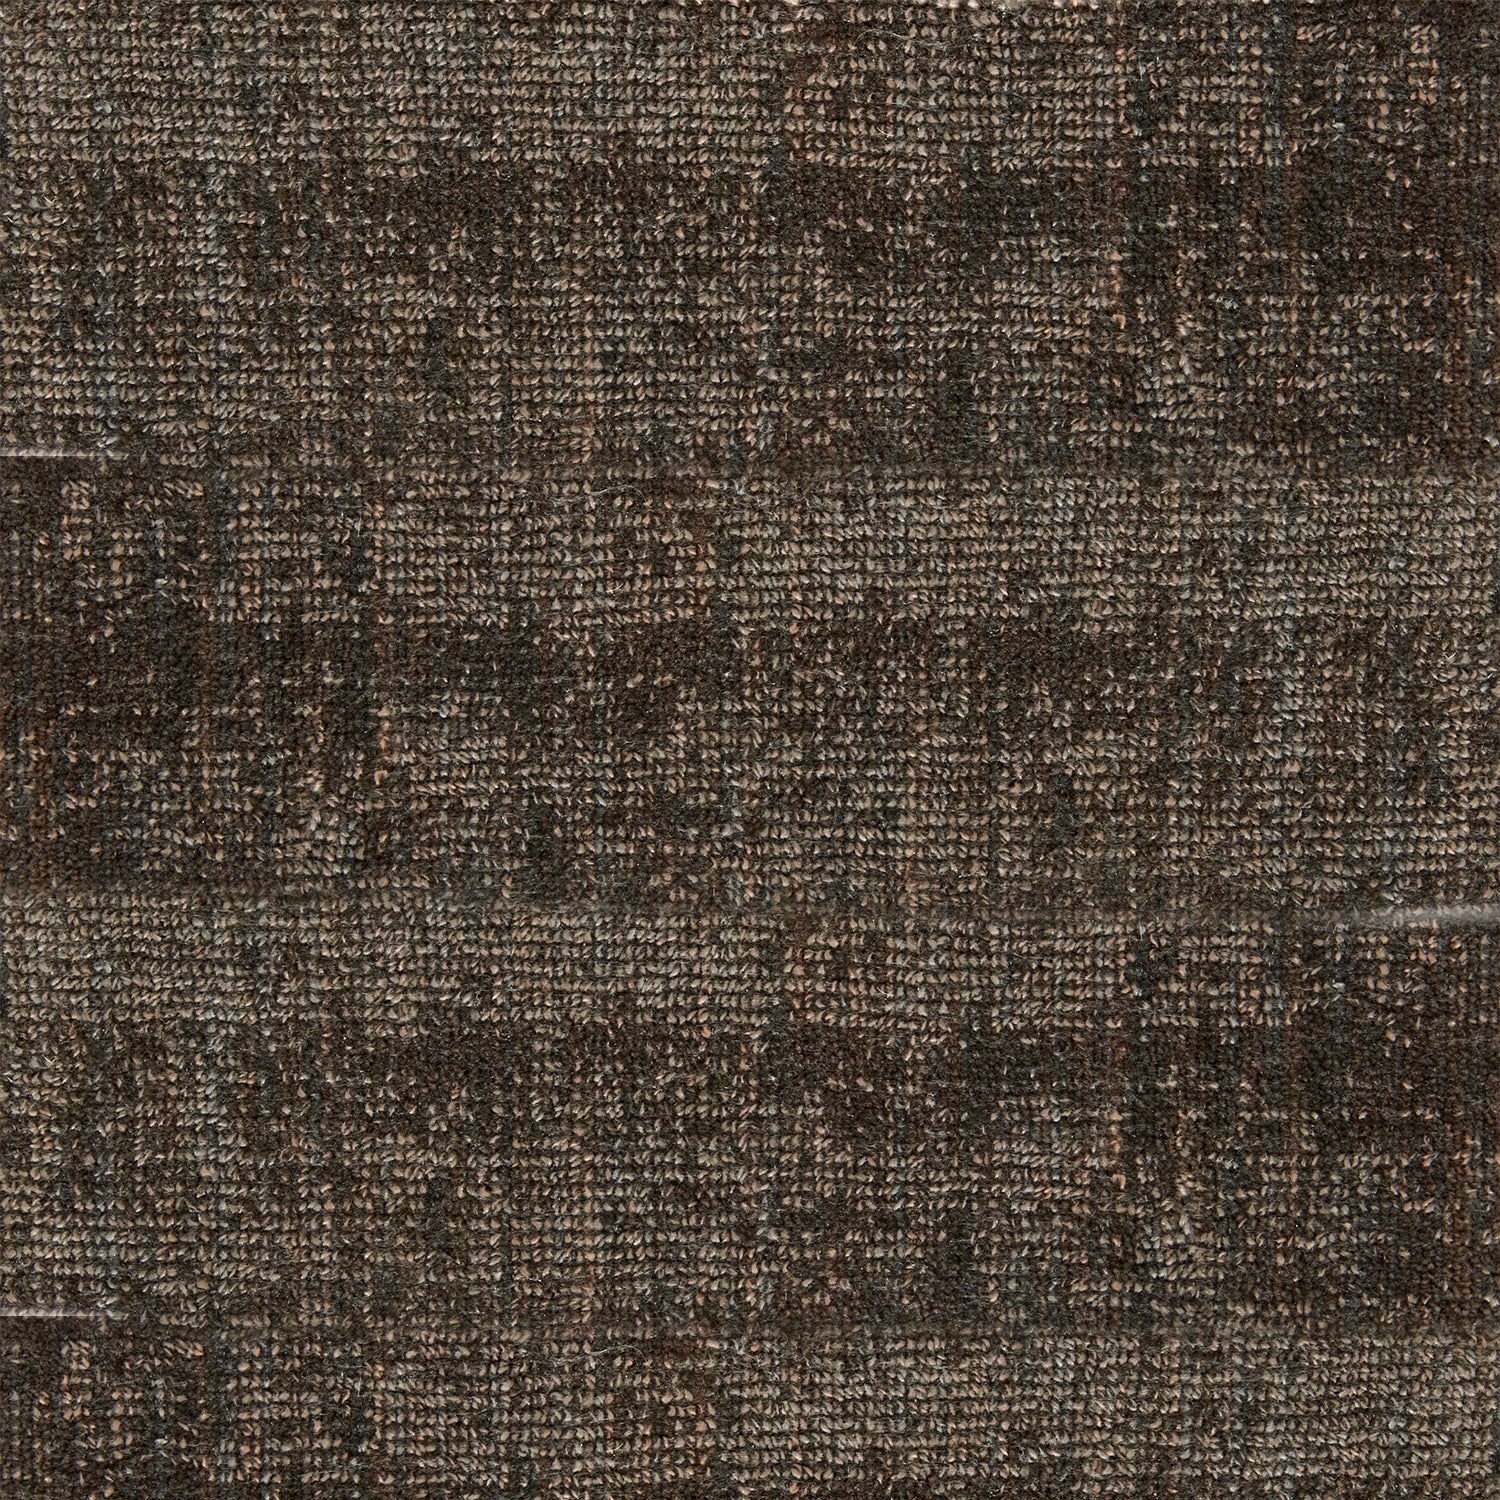 Nylon broadloom carpet swatch in a textured weave in mottled dark brown.